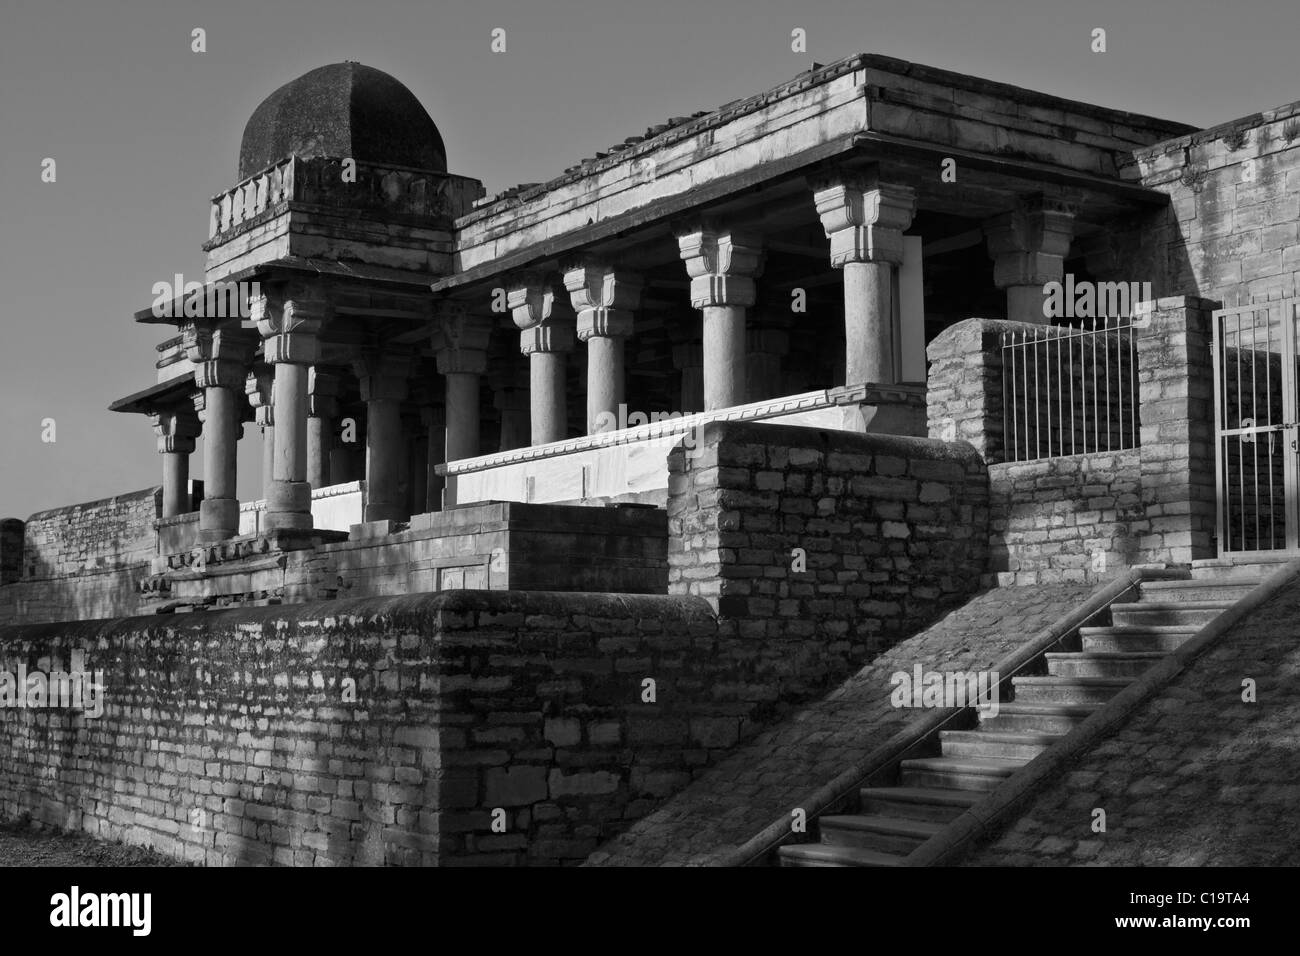 Ruins of a fort, Gwalior Fort, Gwalior, Madhya Pradesh, India Stock Photo